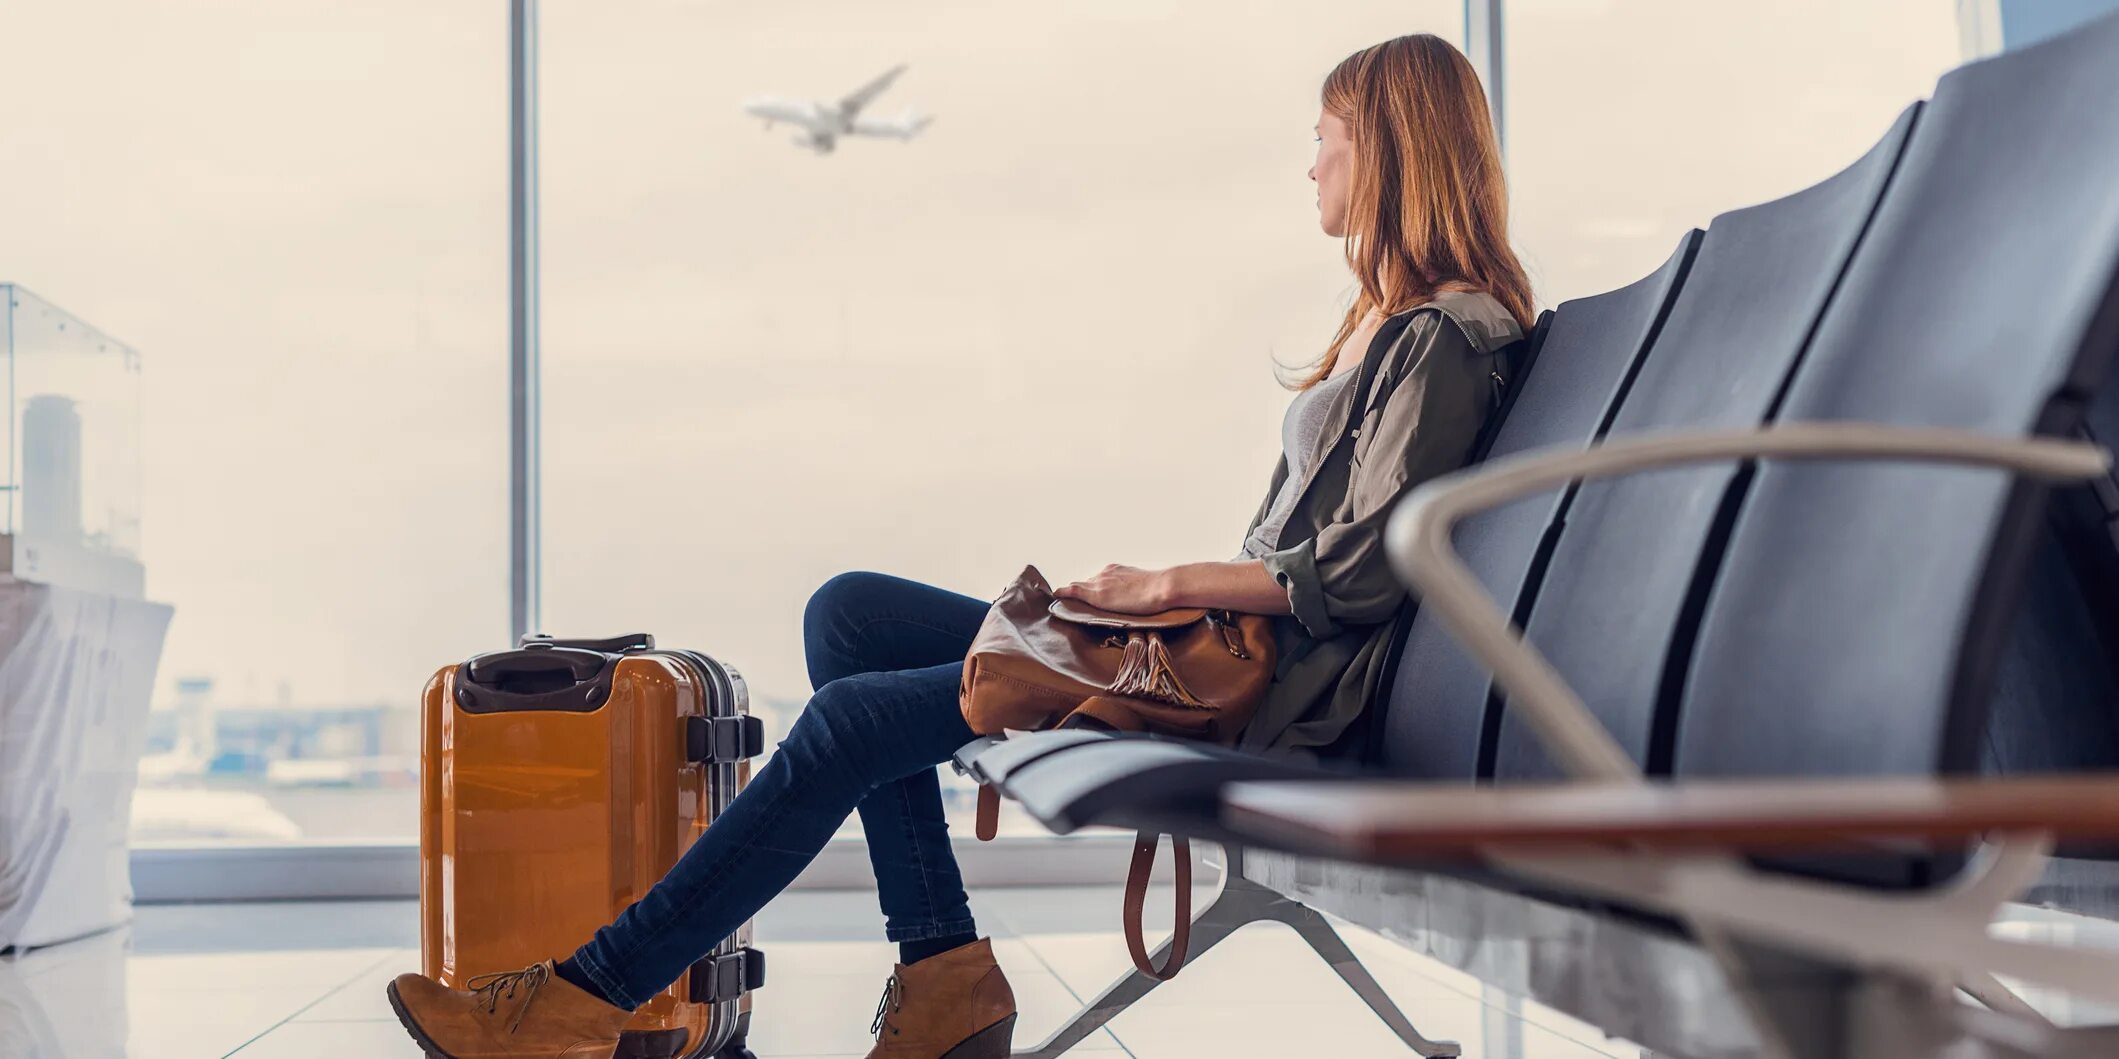 Девушка в аэропорту. Девка с чемоданом в аэропорту. Ожидание в аэропорту. Фотосессия в аэропорту.